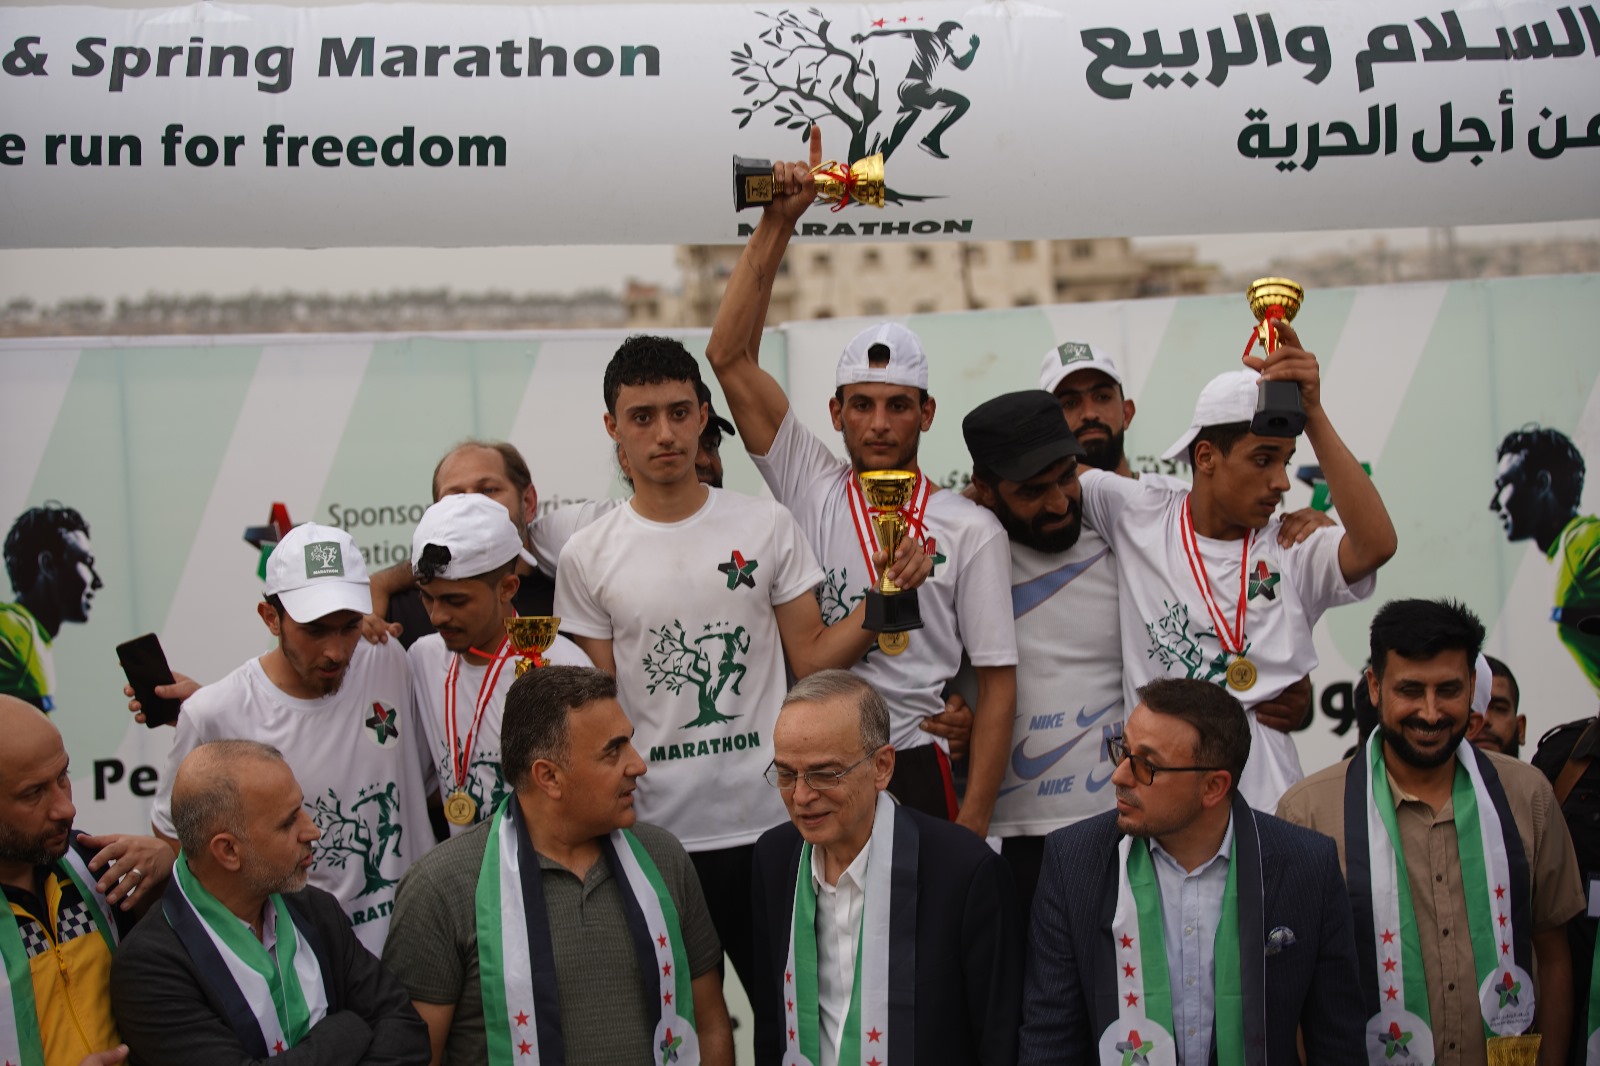 Afrin Hosts Peace and Spring Marathon on Saturday